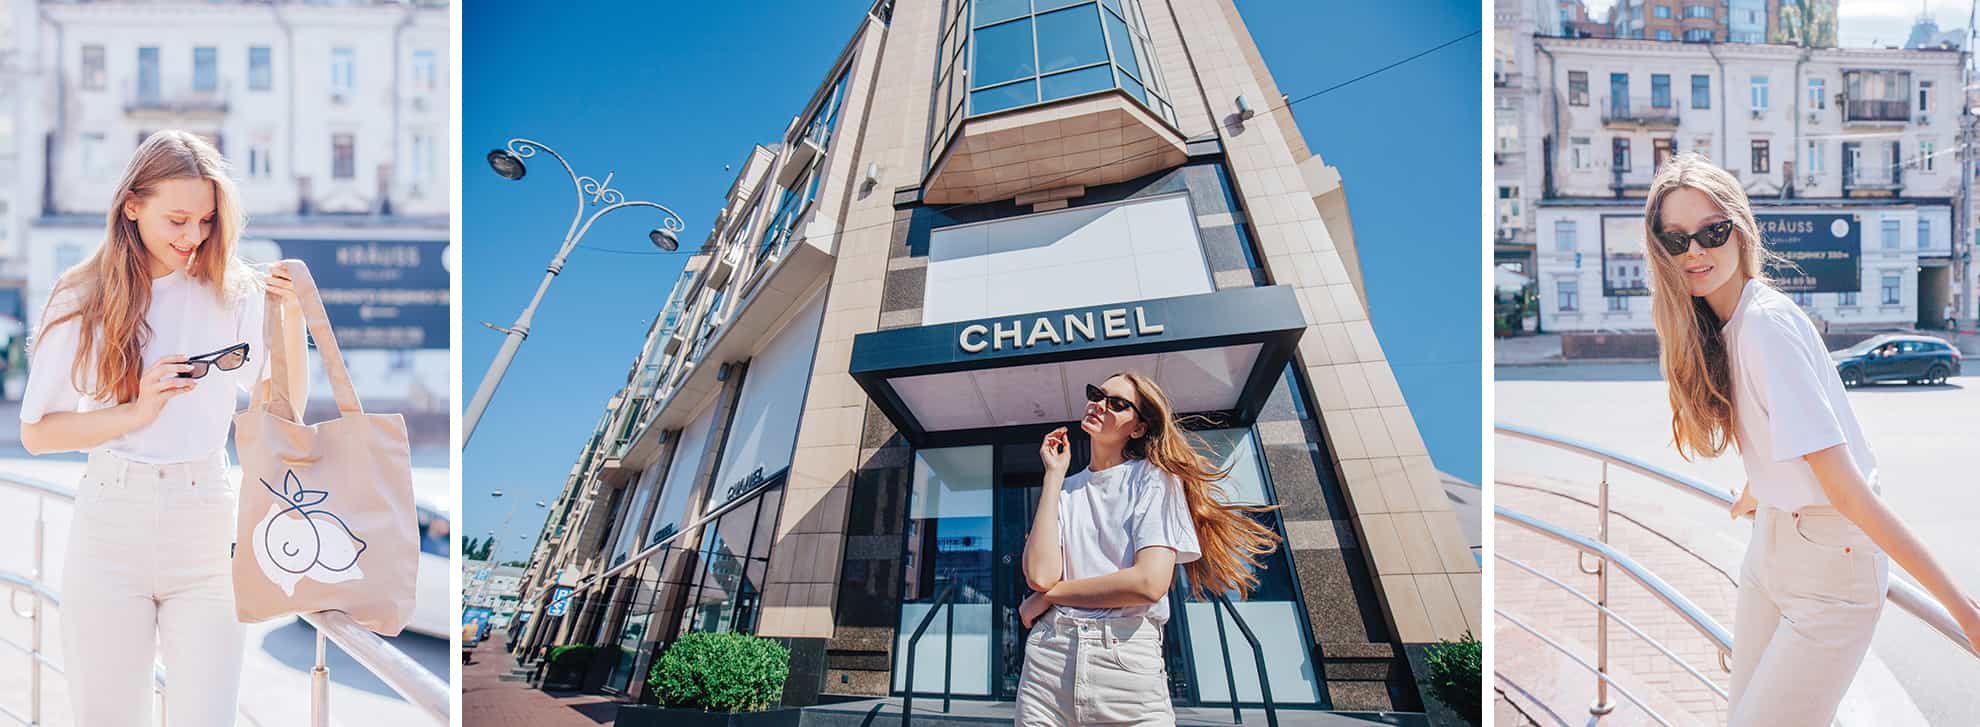 Chanel Kyiv